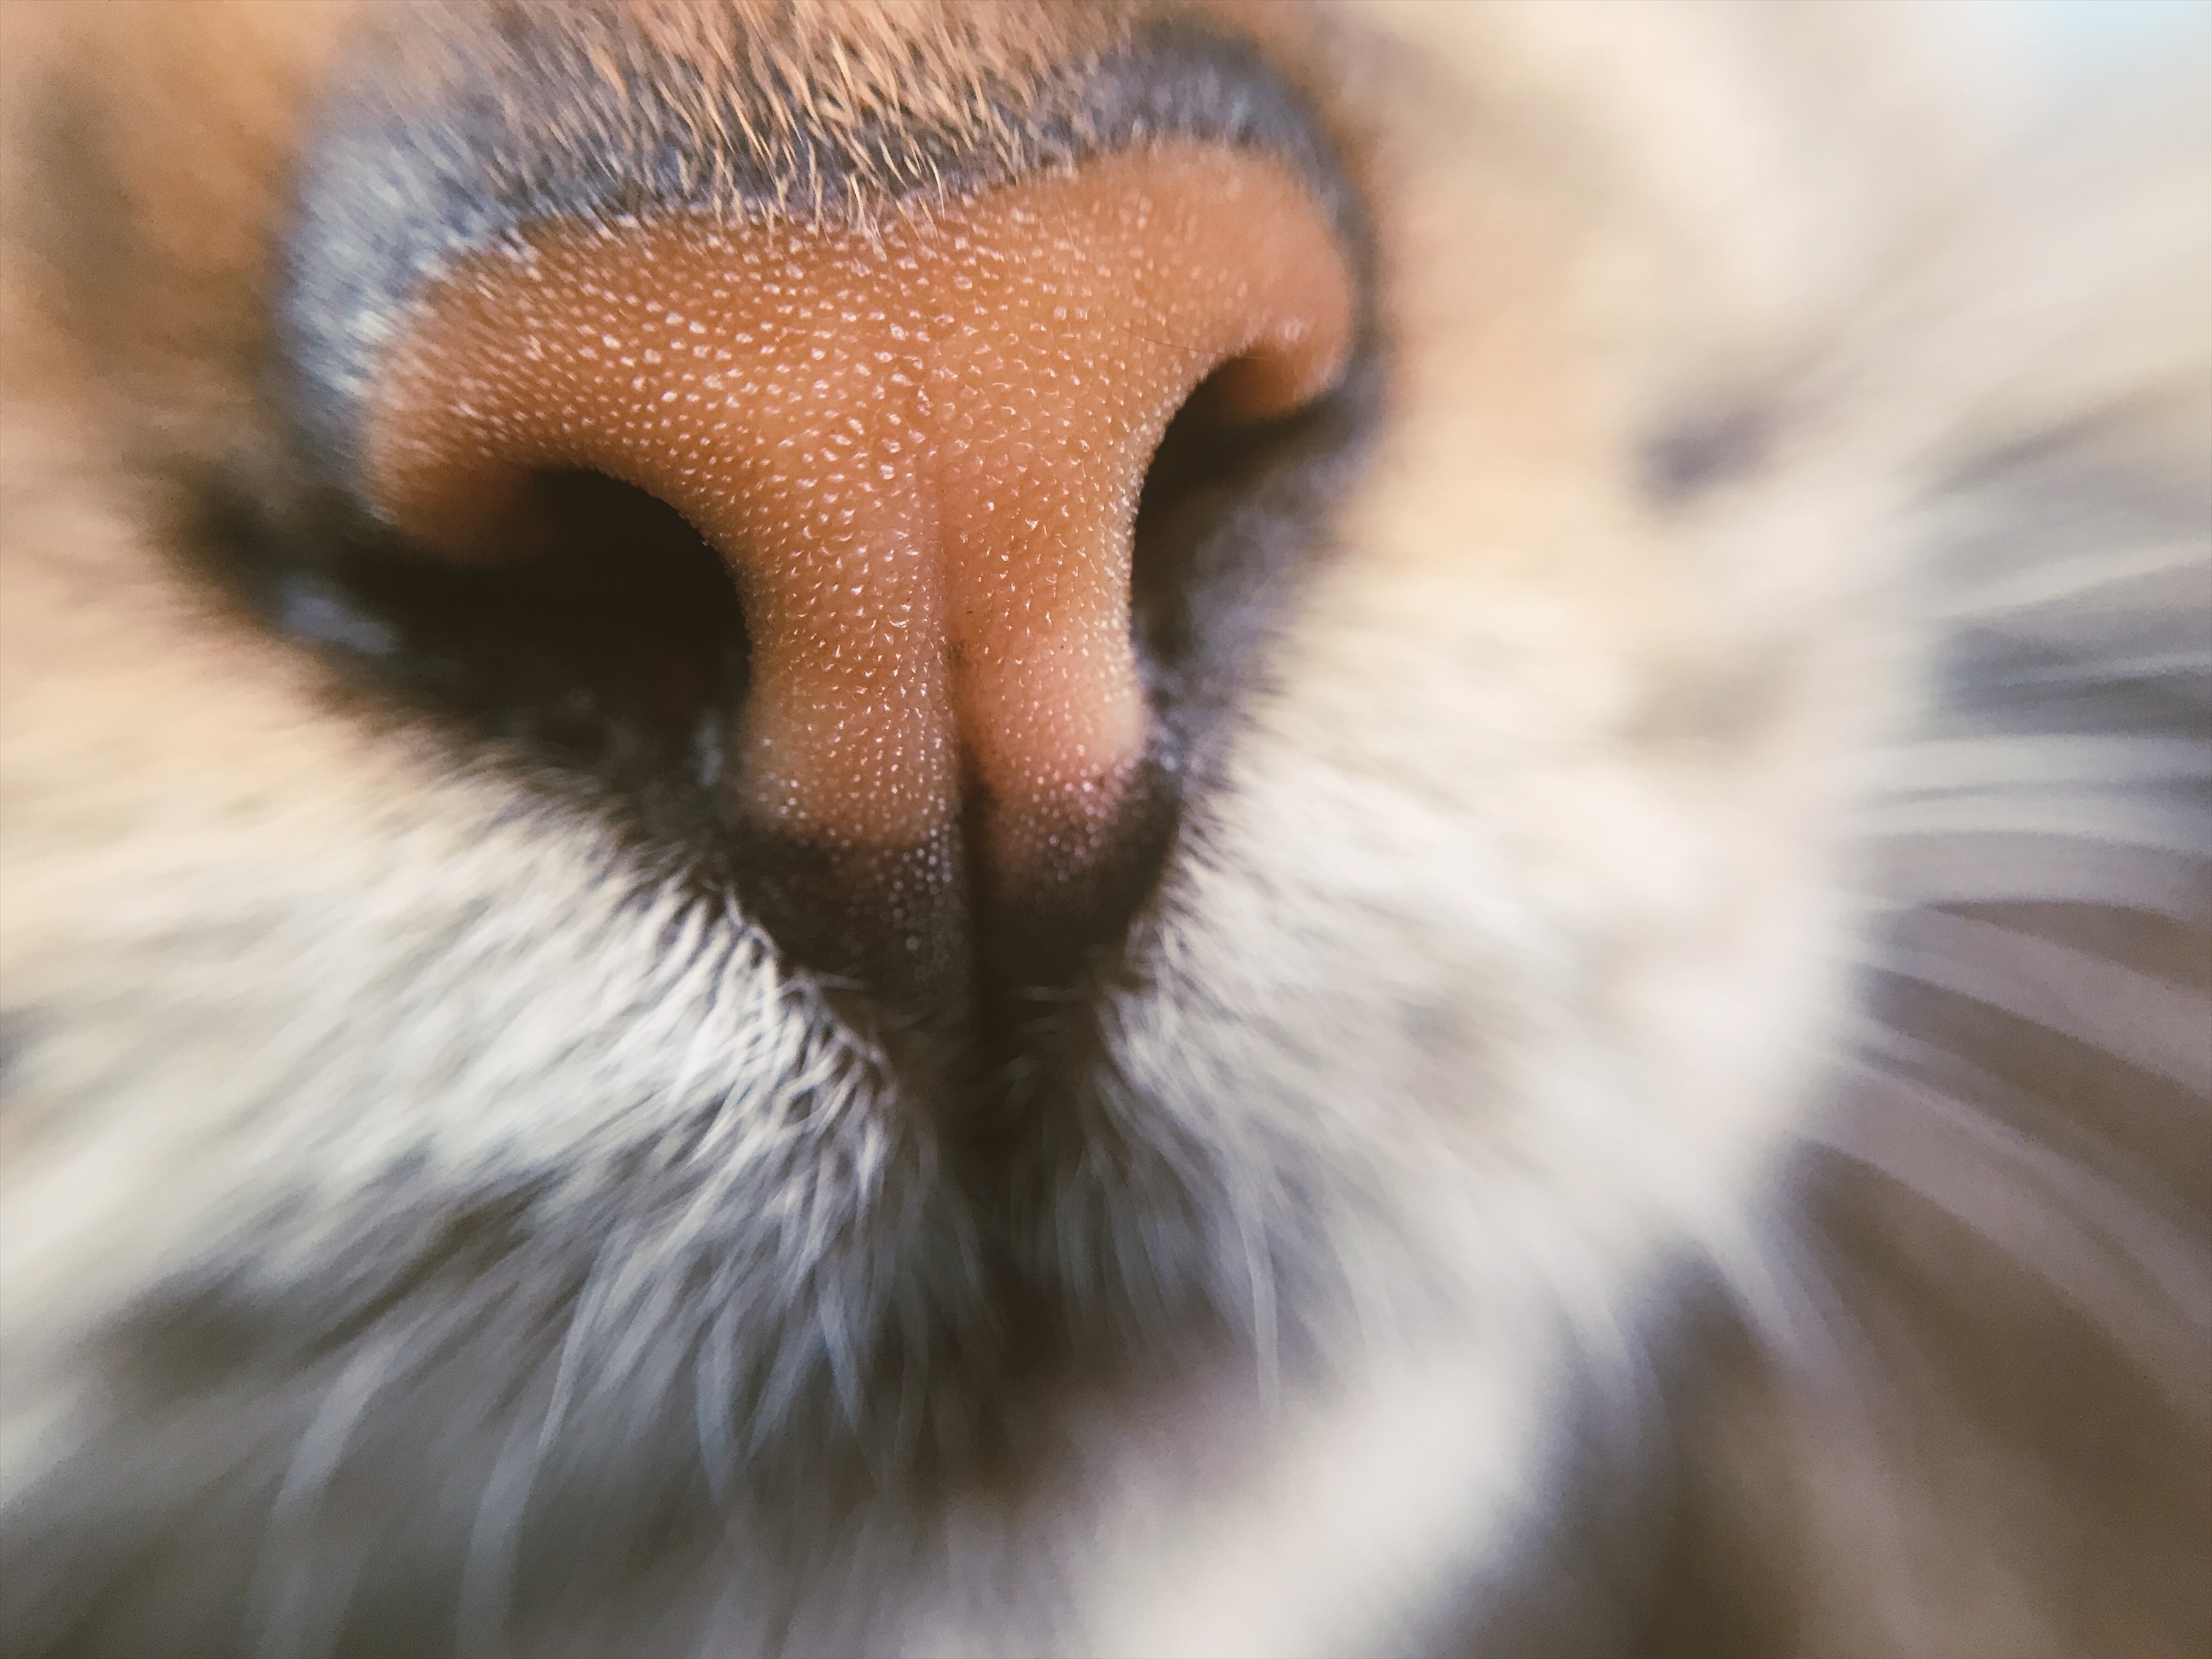 Кошка нос и рот. Нос кошки. Кошачий носик. Макросъемка носа кошки. Кошка крупным планом.